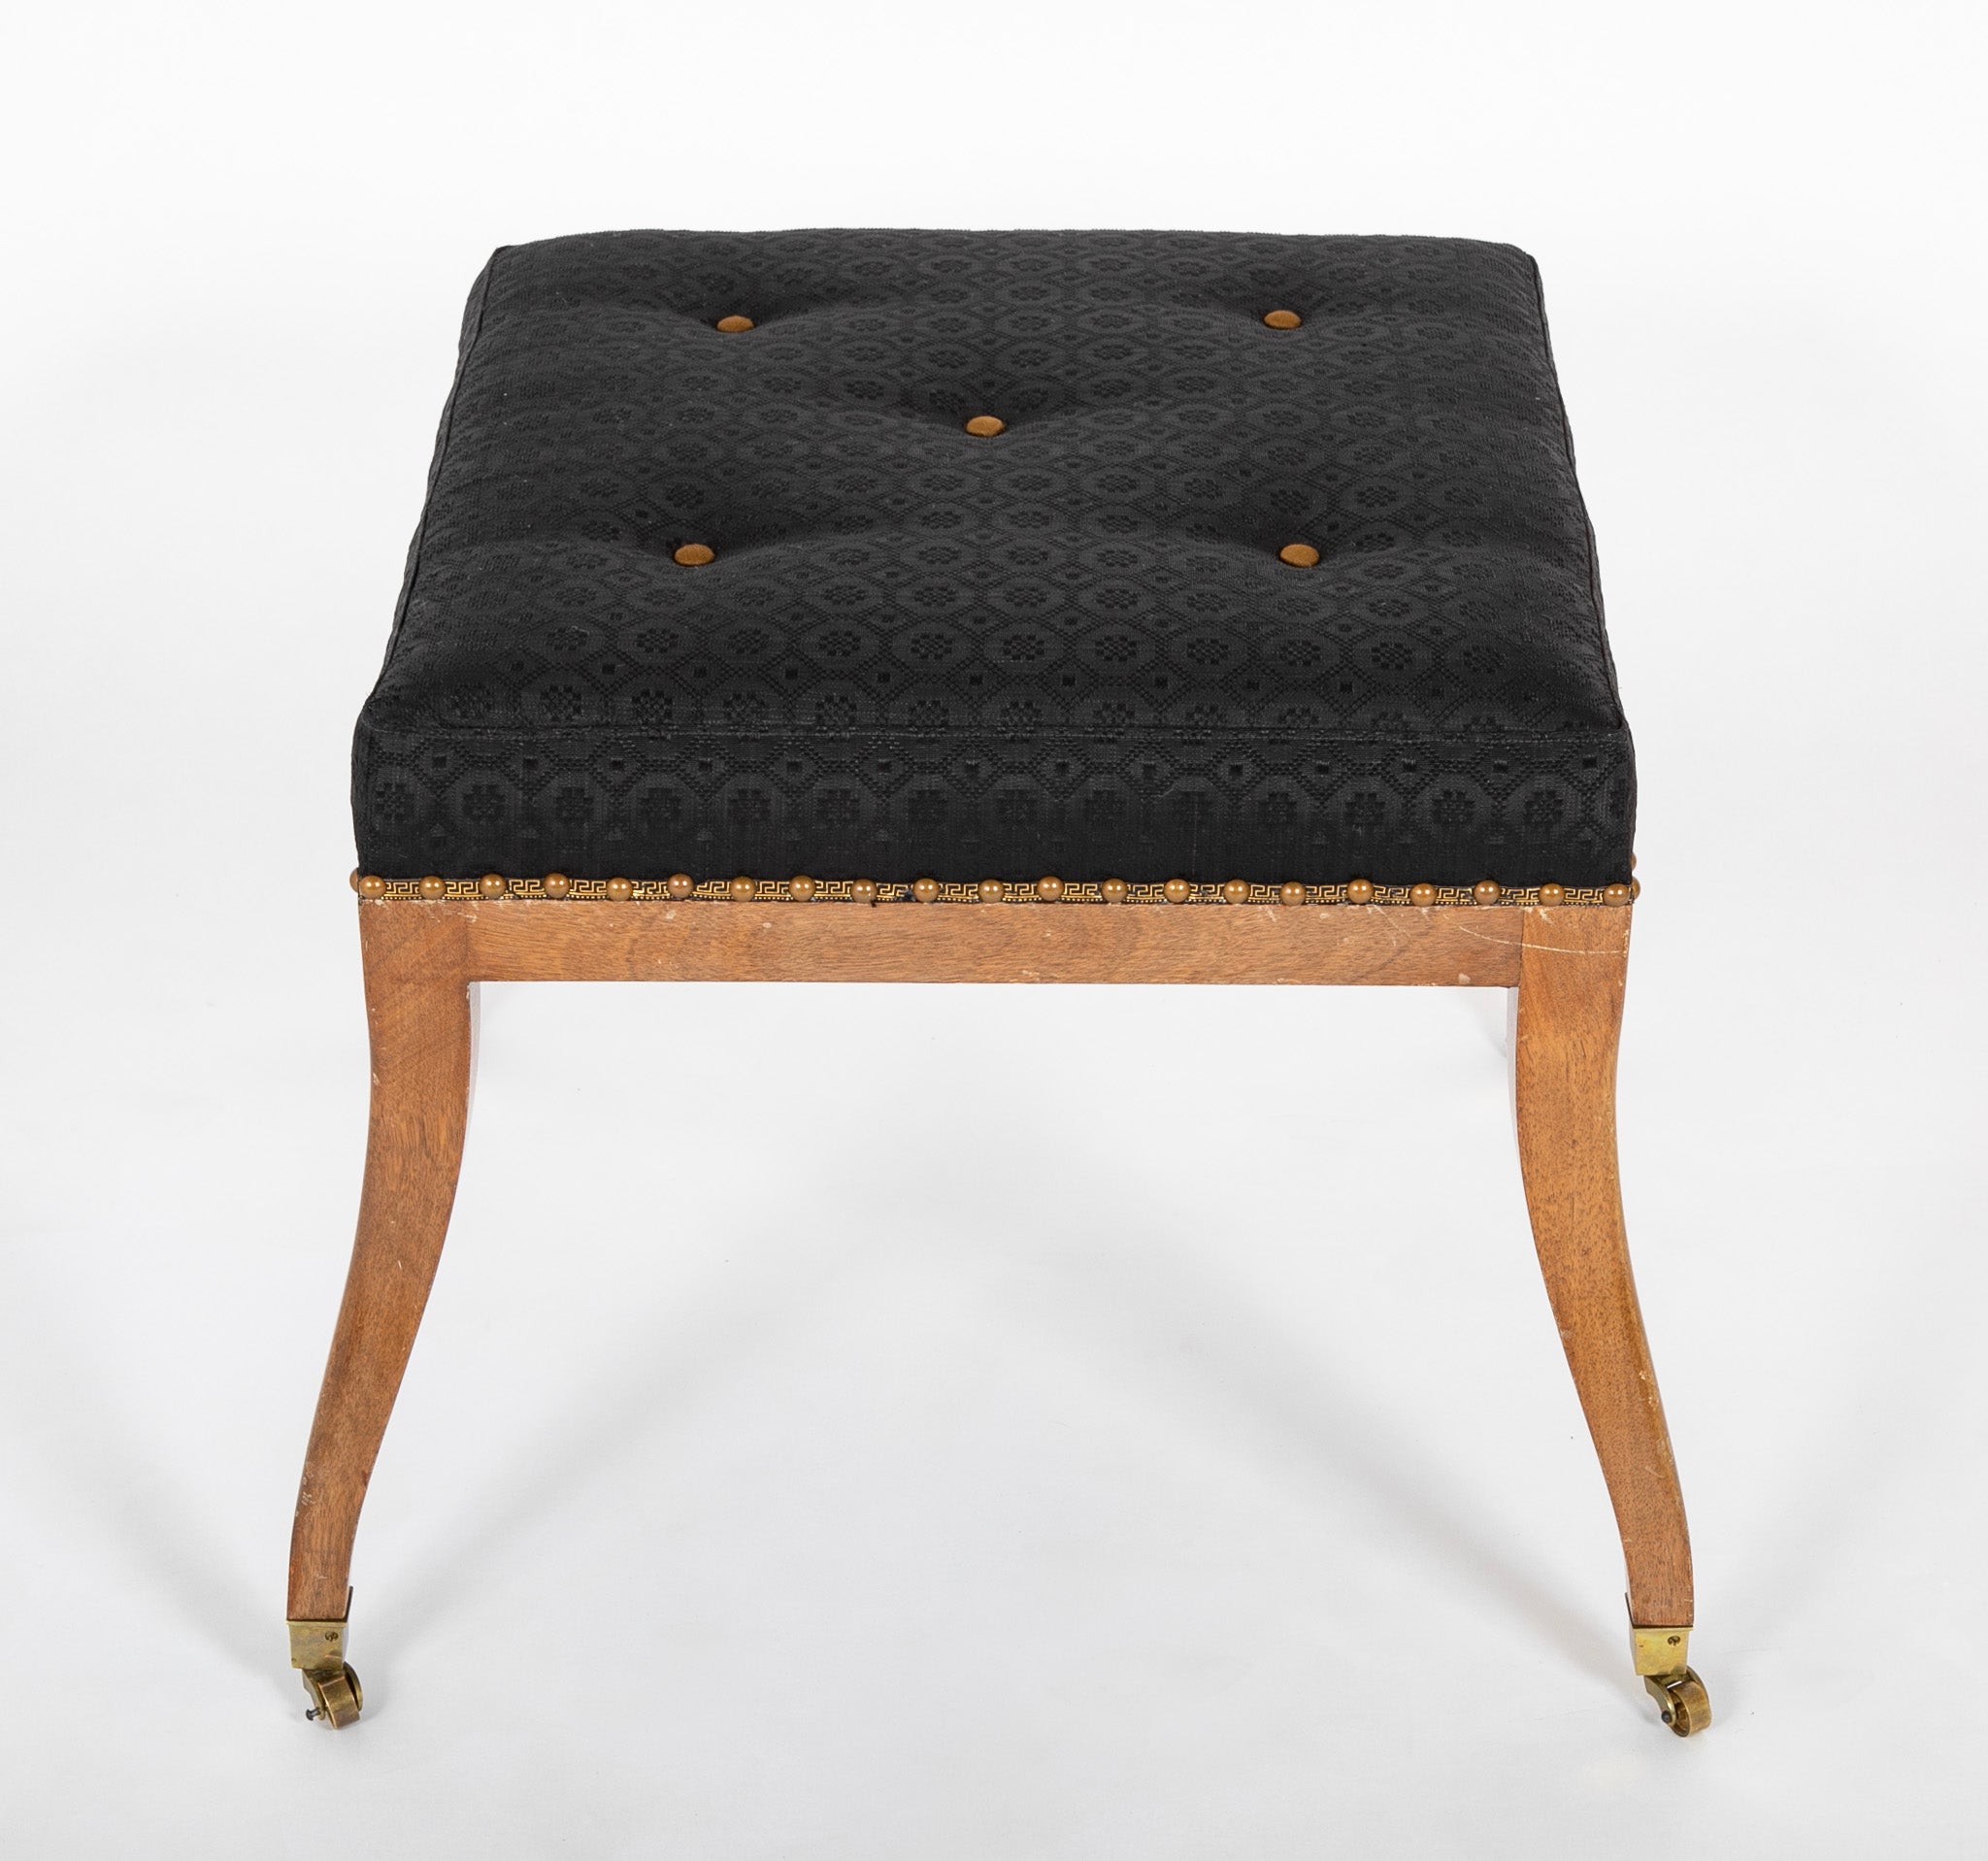 Georgian Stool Upholstered in Quality Black Horsehair